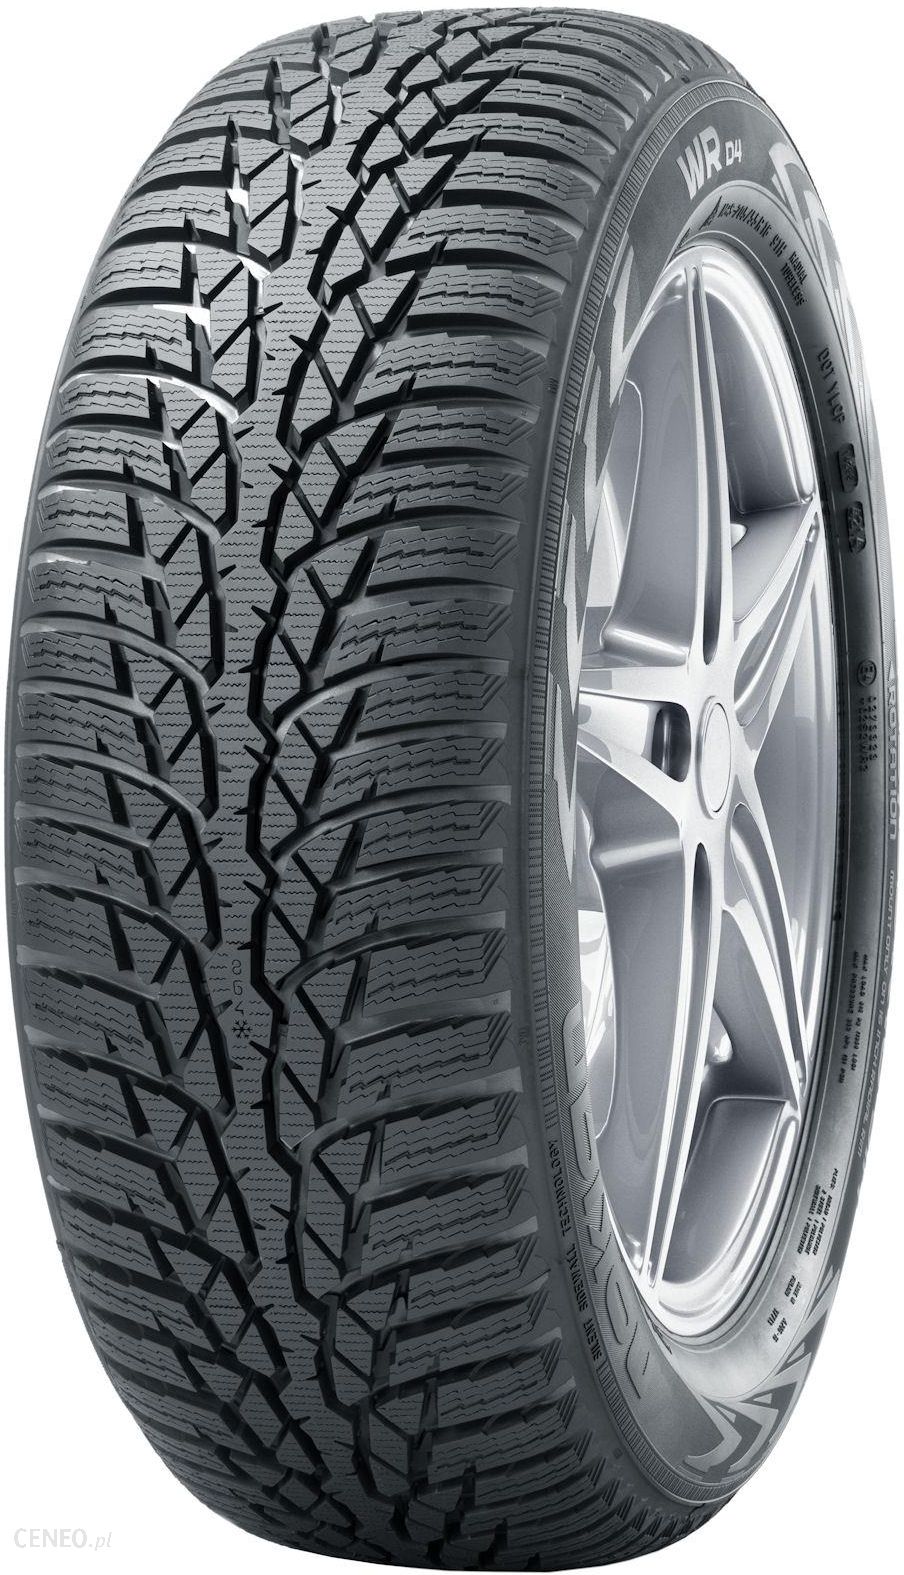 Punctuation disease Badly Opony zimowe Nokian Tyres Wr D4 205/55R16 91T - Sklepy, opinie i ceny na  Ceneo.pl